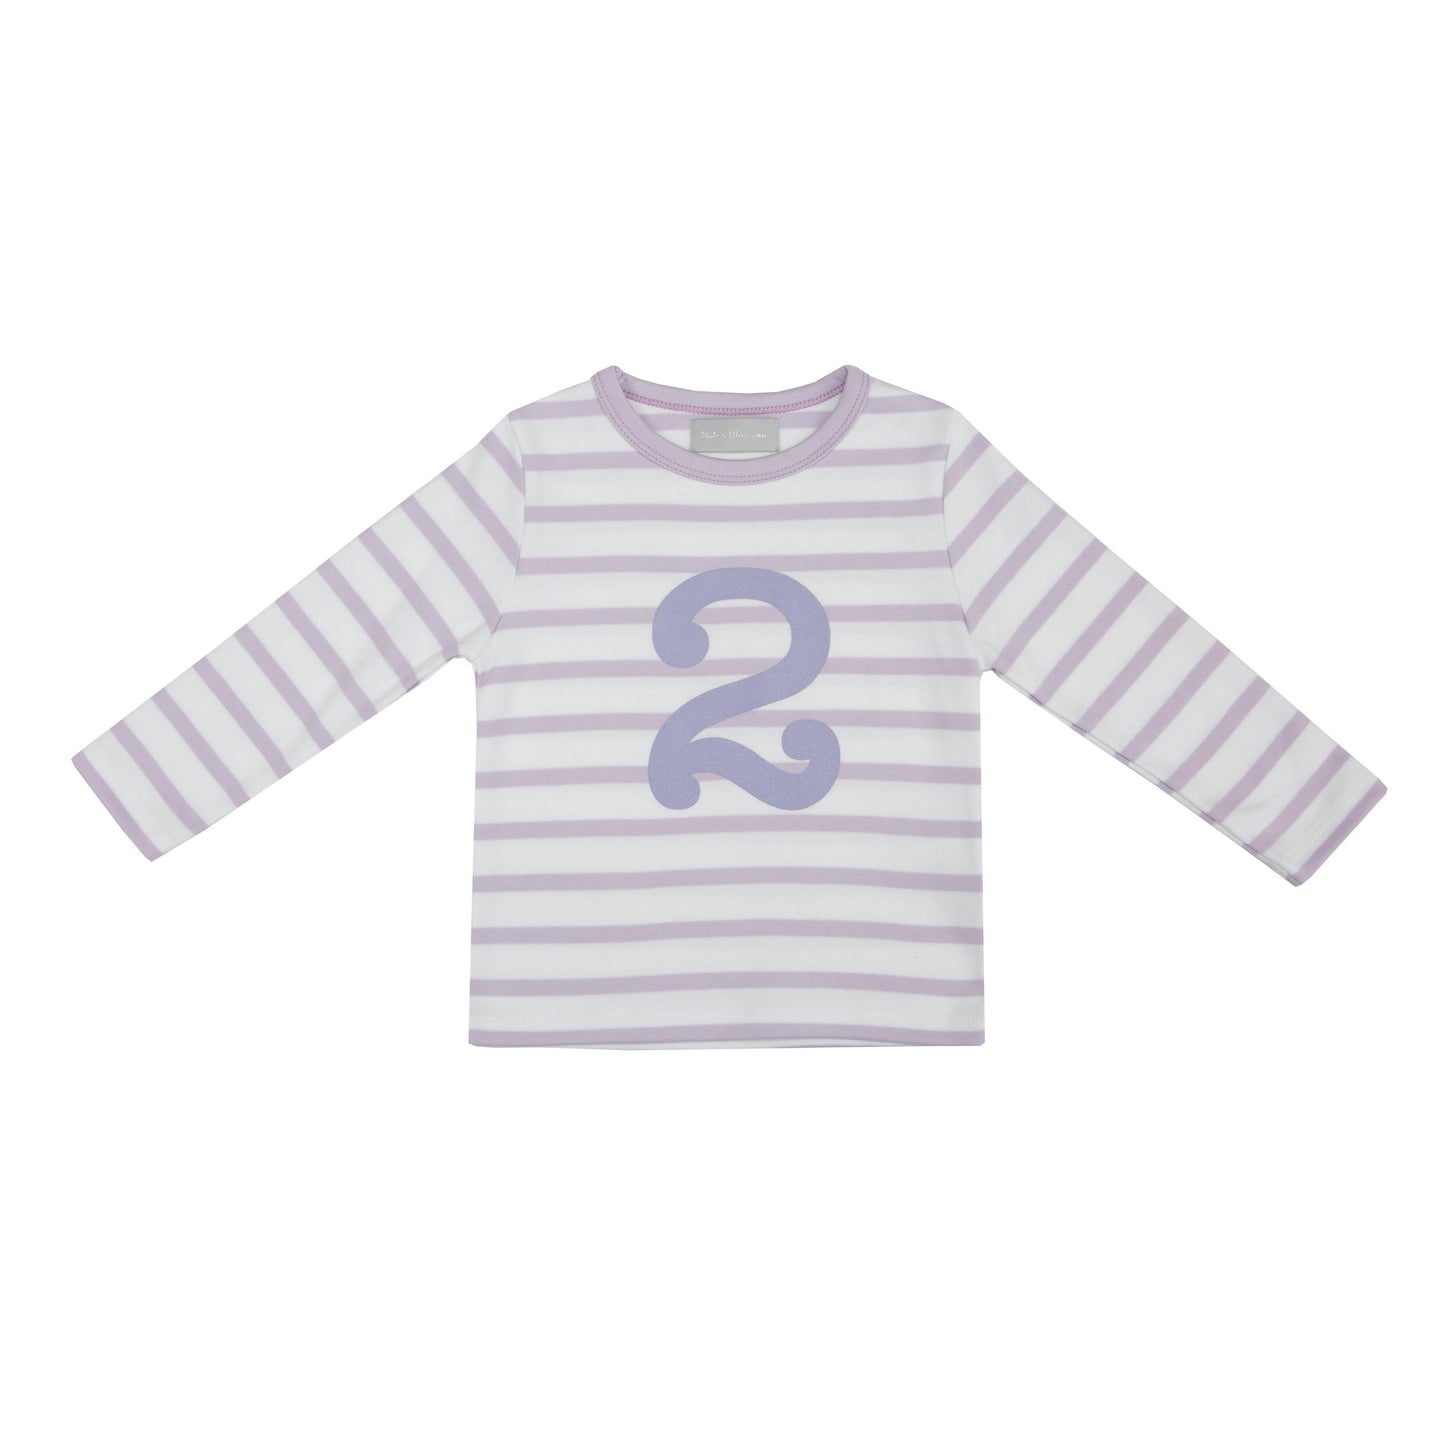 Violet & White Breton Striped Number 2 T Shirt